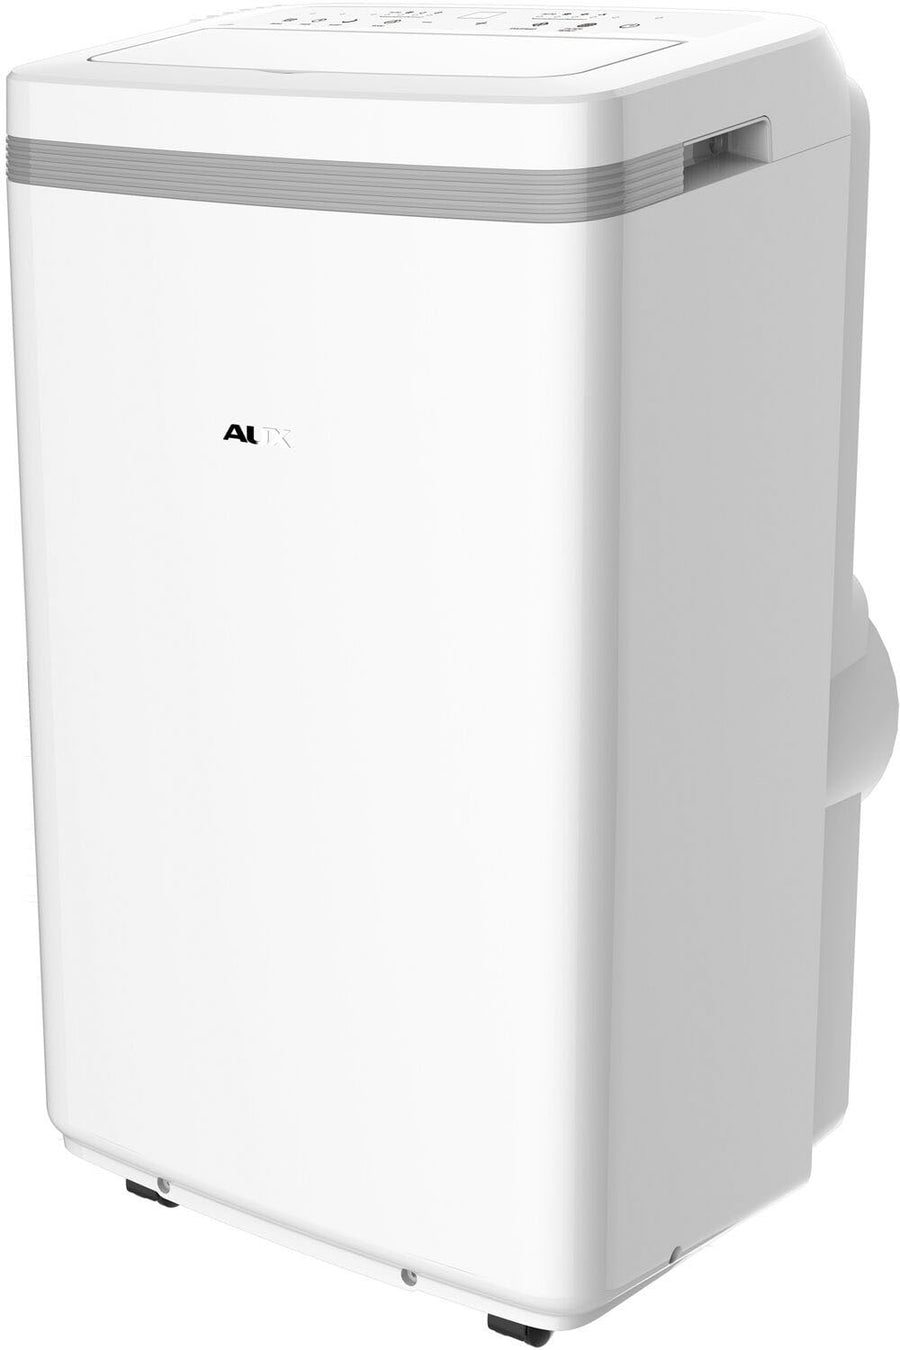 AuxAC - 200 Sq. Ft Portable Air Conditioner - White_0